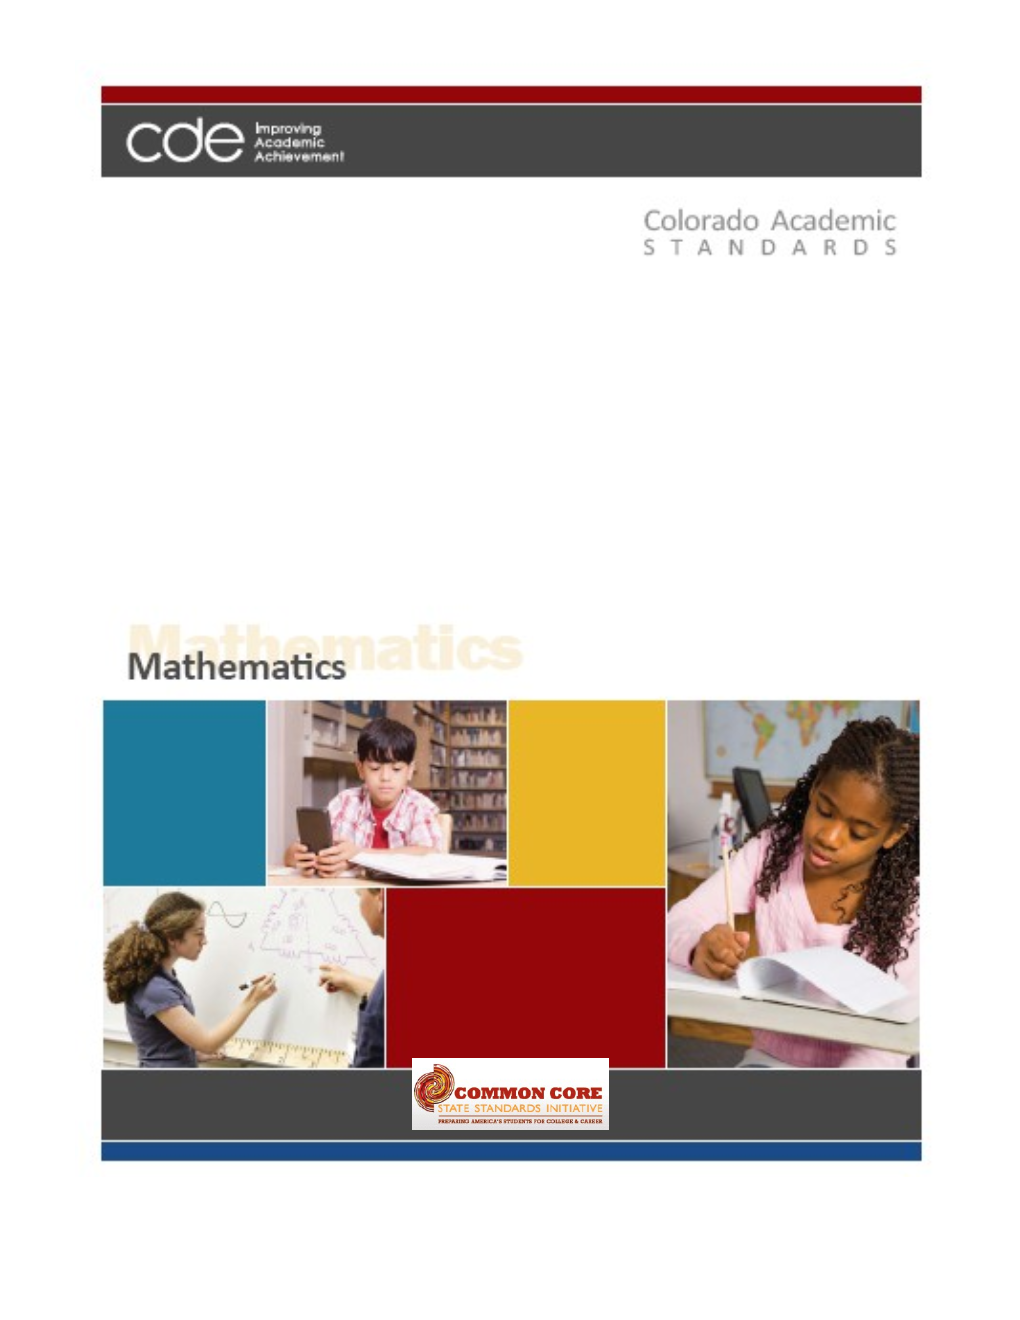 Colorado Academic Standards in Mathematics